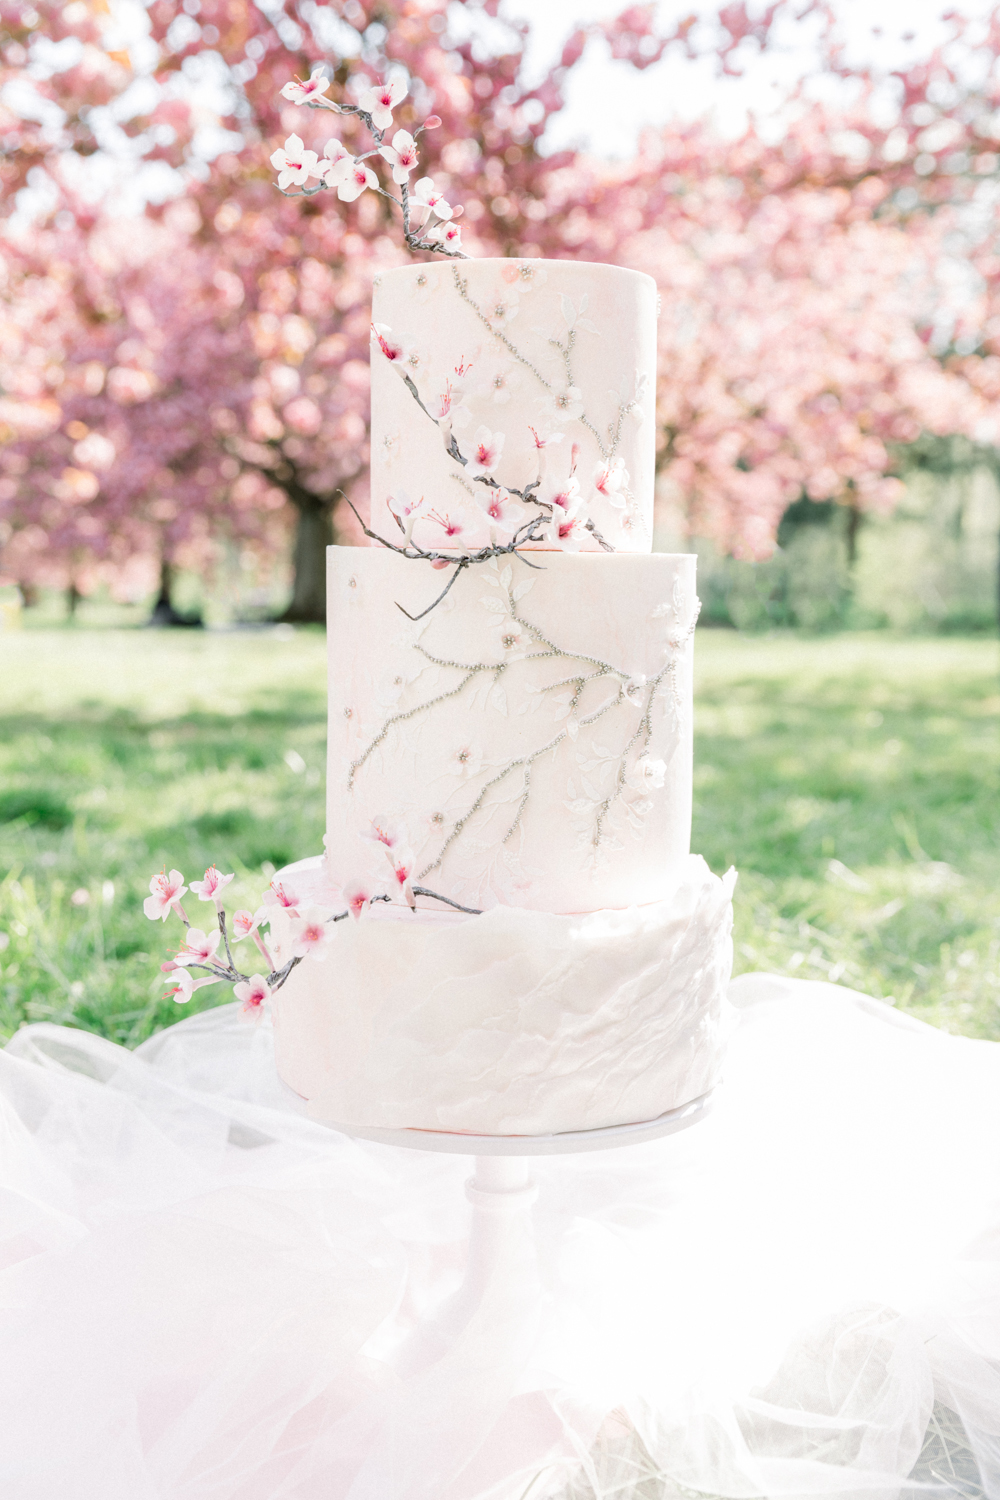 North Texas Wedding Cake Artist Delicious Cakes - Brides of North Texas